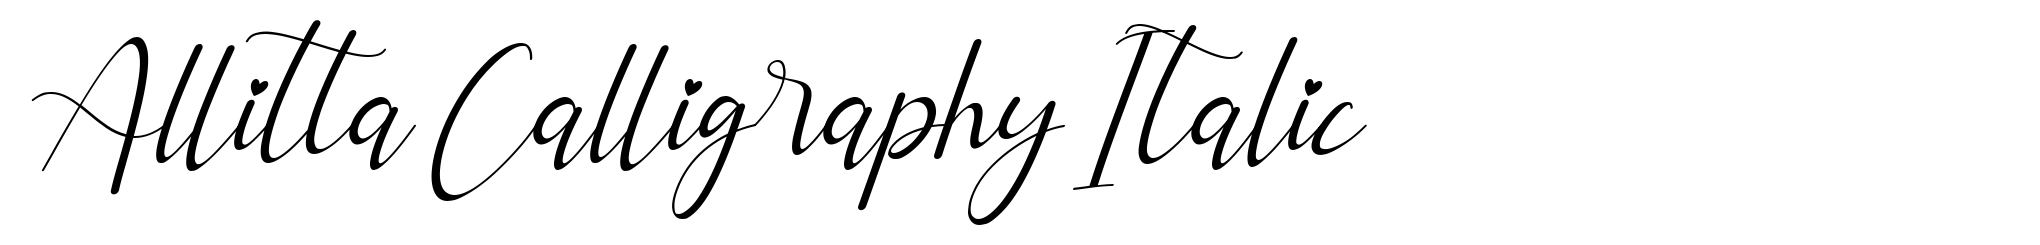 Allitta Calligraphy Italic image